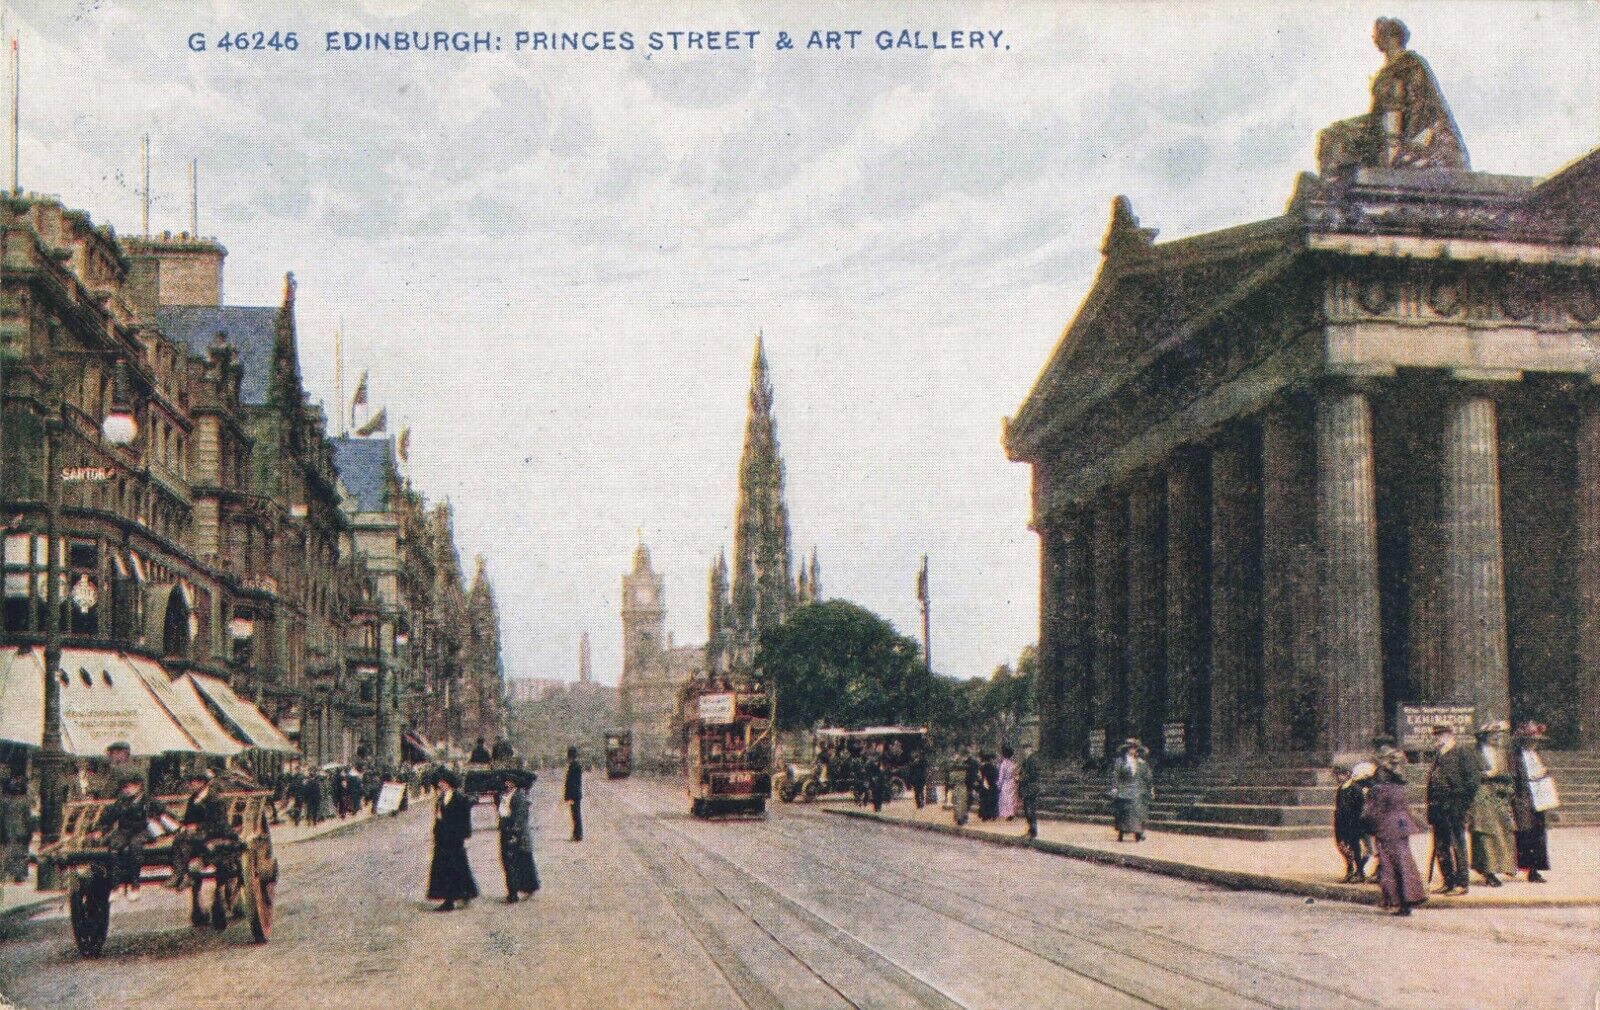 Princess Street & Art Gallery Edinburgh Scotland c1920 Postcard